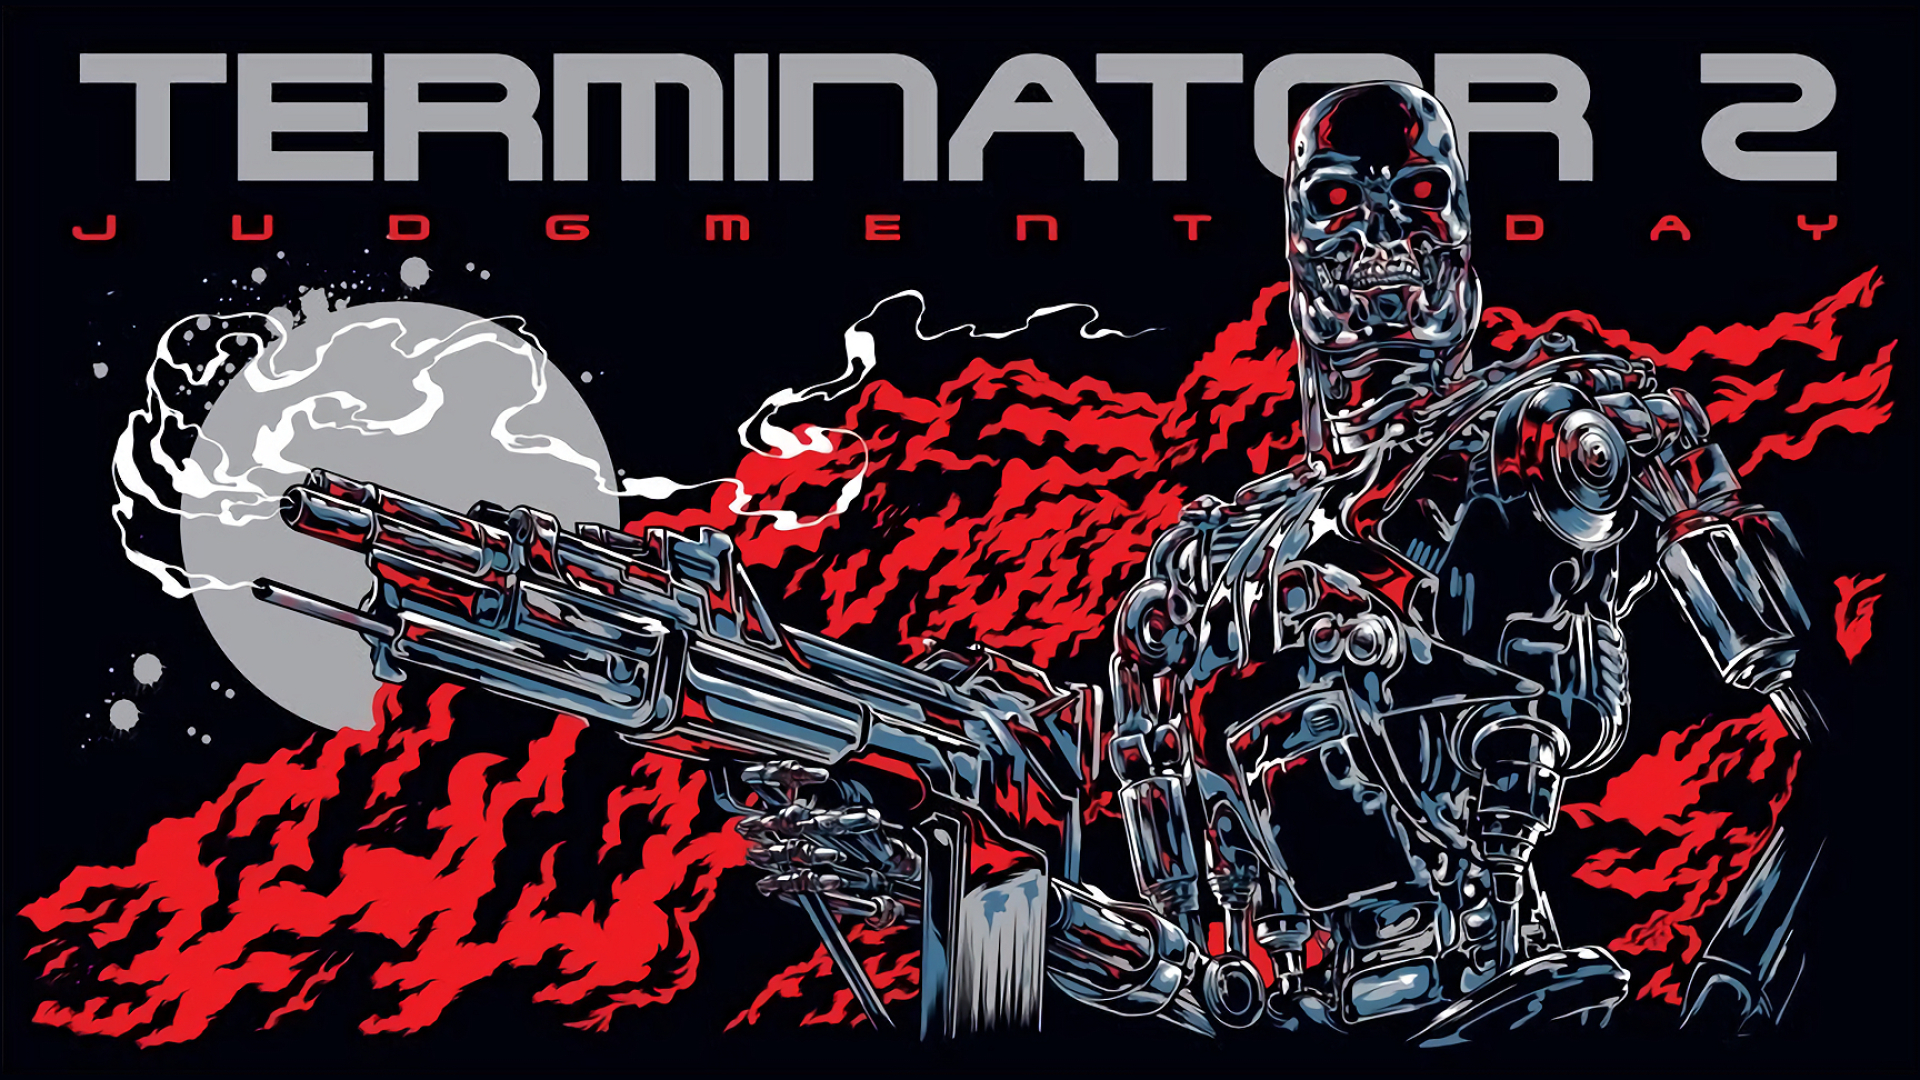 1920x1080 Cool Terminator 2 Fan Poster / Wallpaper Album on Imgur